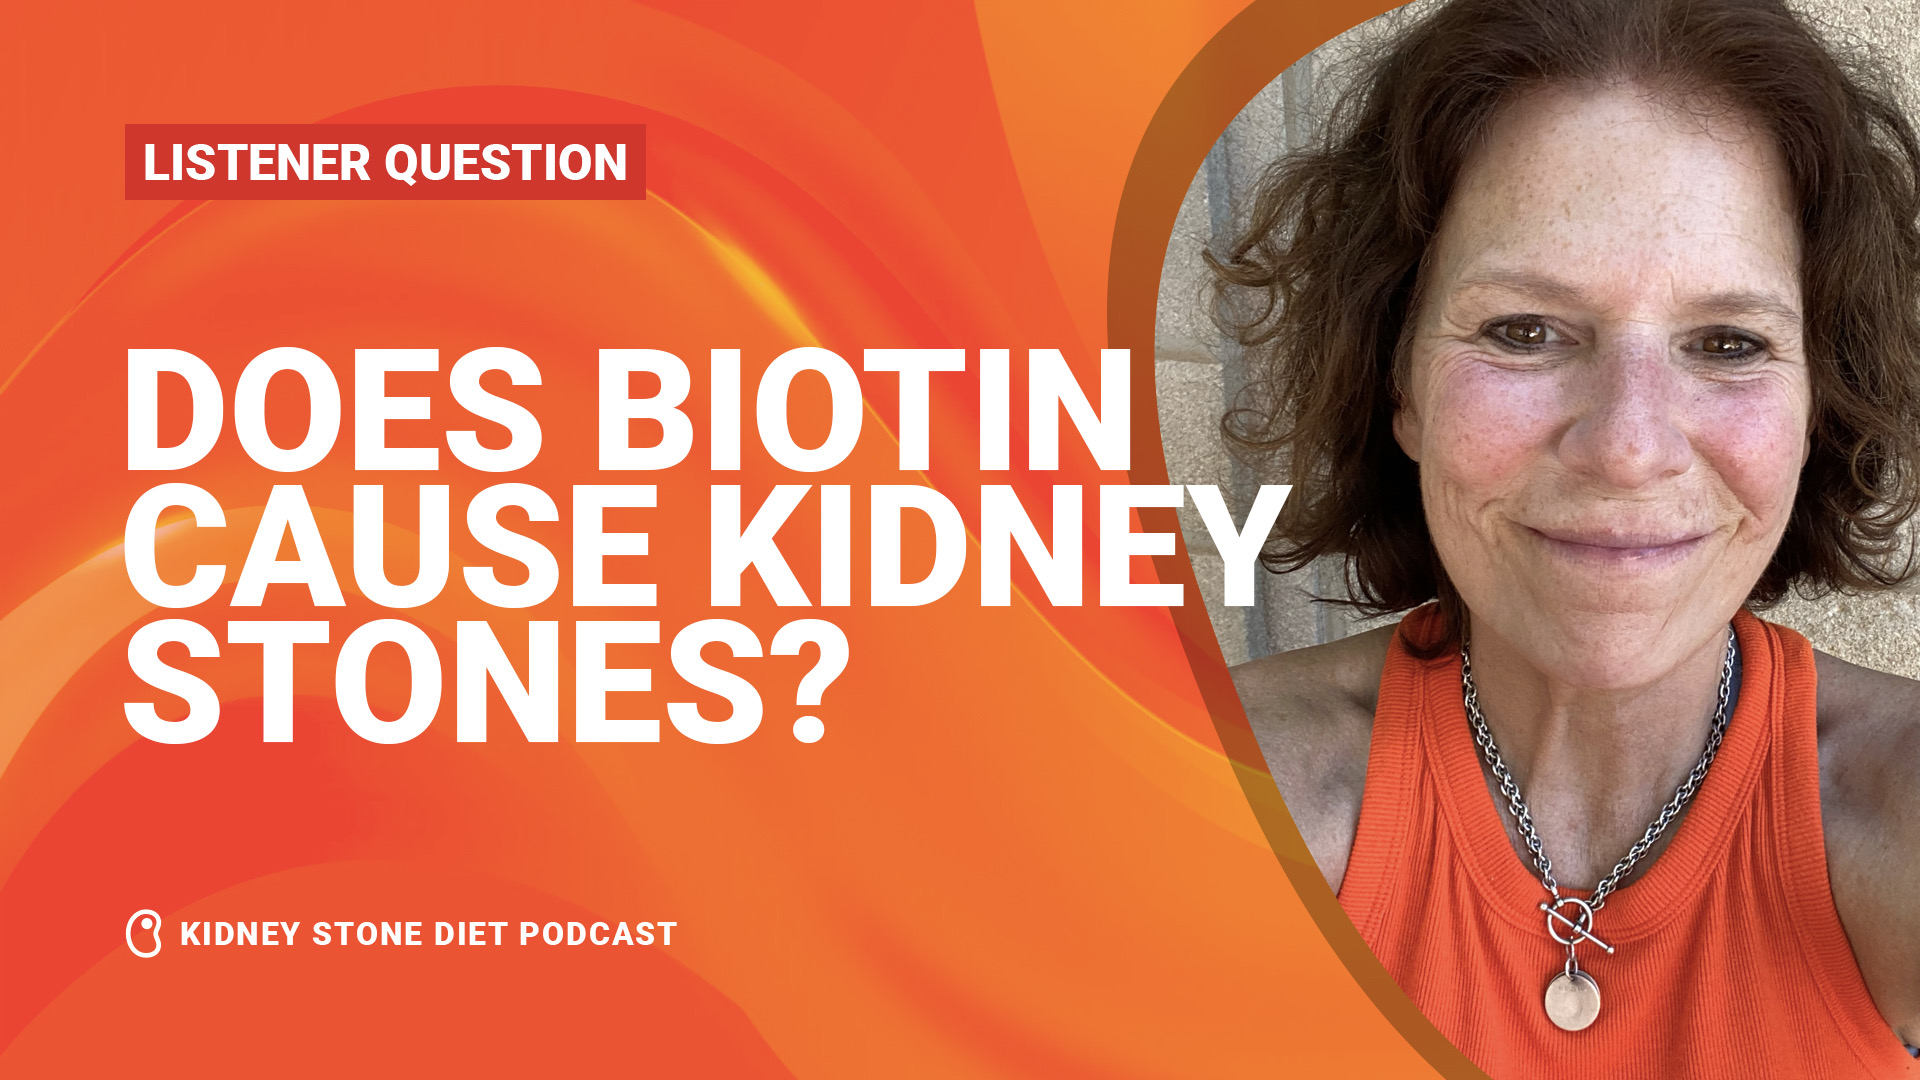 Does biotin cause kidney stones?